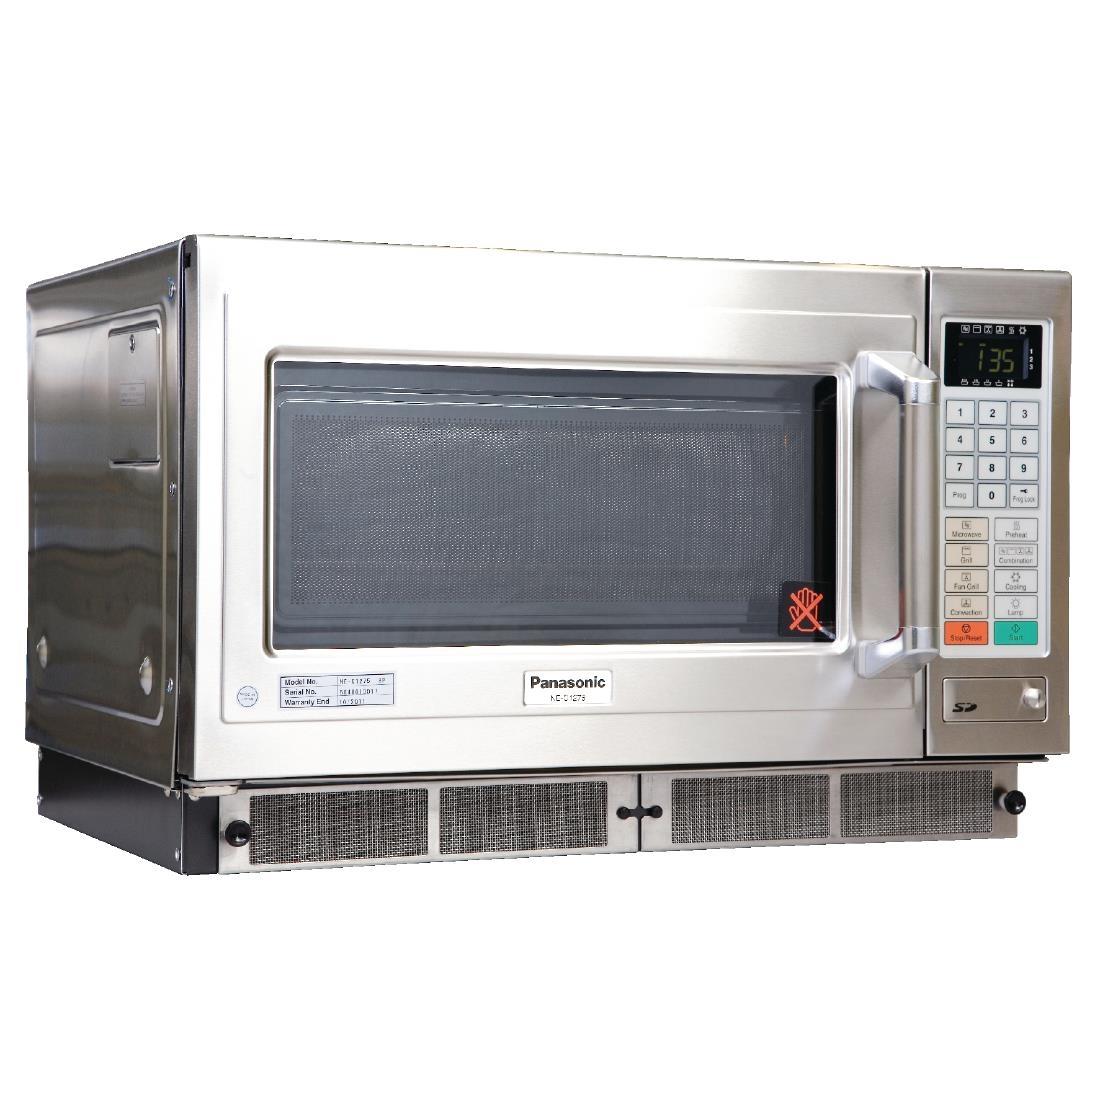 Panasonic Combination Microwave Grill 30ltr NE-C1275 - CD092  - 1